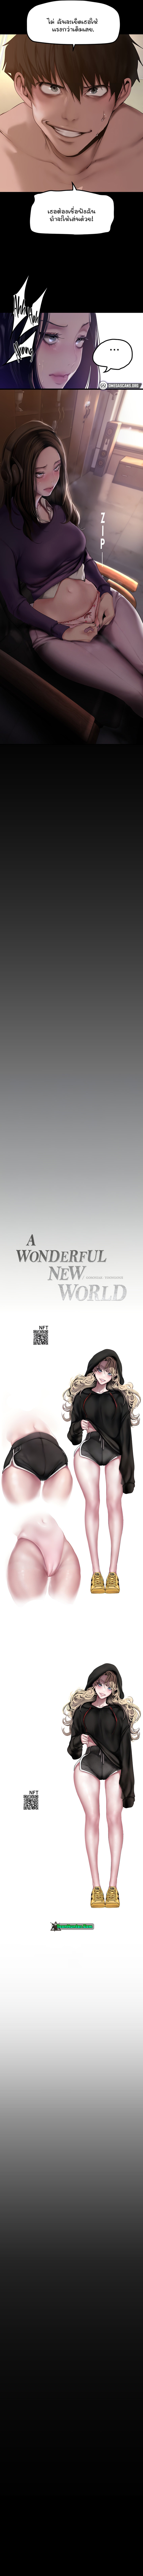 A Wonderful New World3